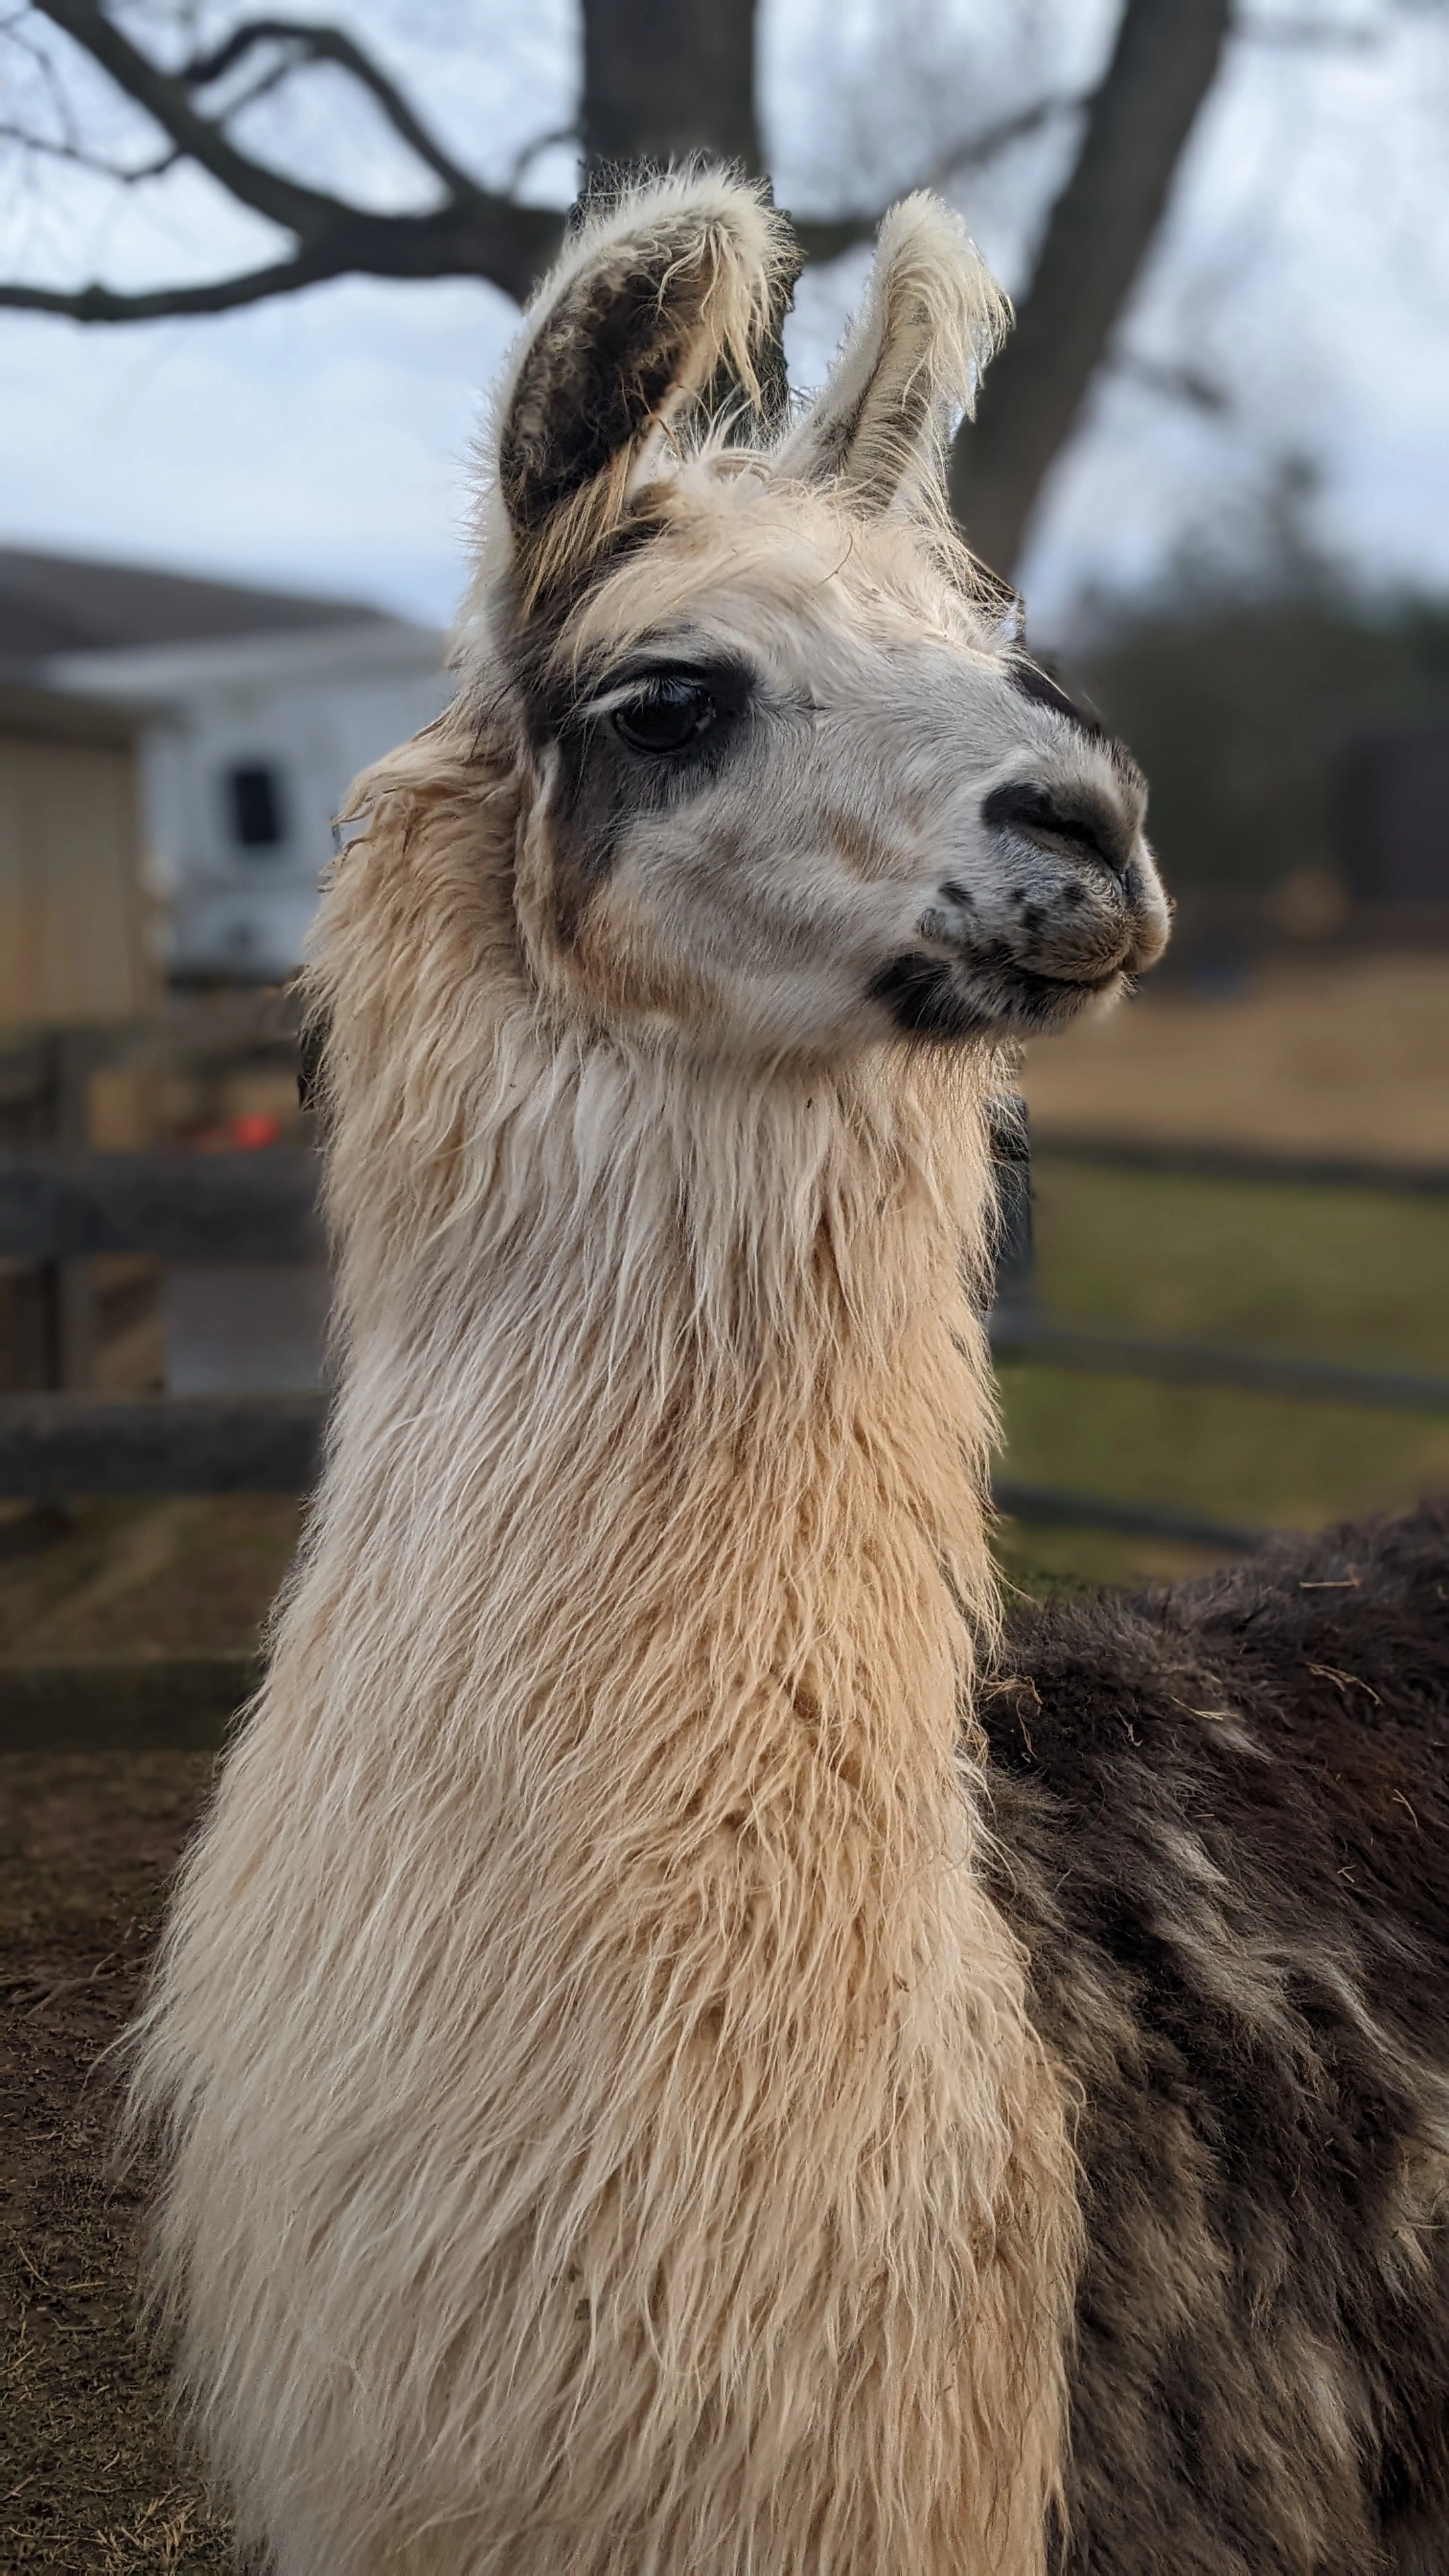 A portrait image of a llama named Miss Bennett